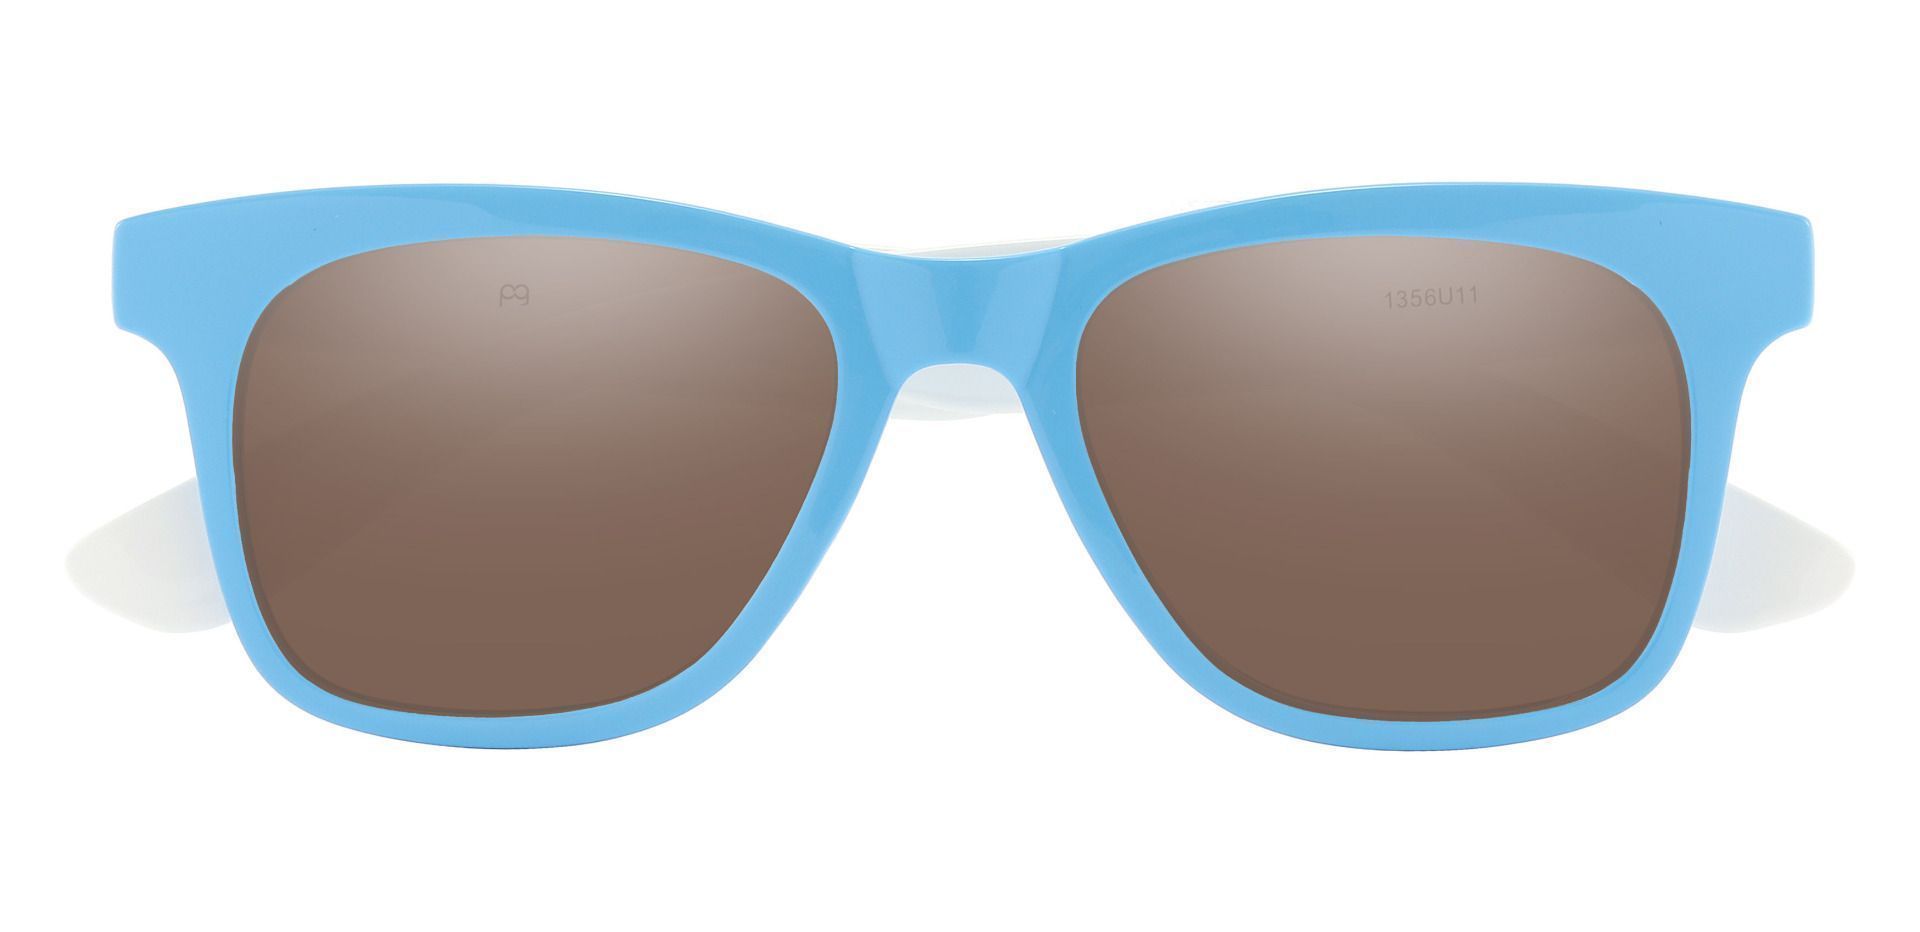 Hurley Square Progressive Sunglasses - Blue Frame With Brown Lenses ...